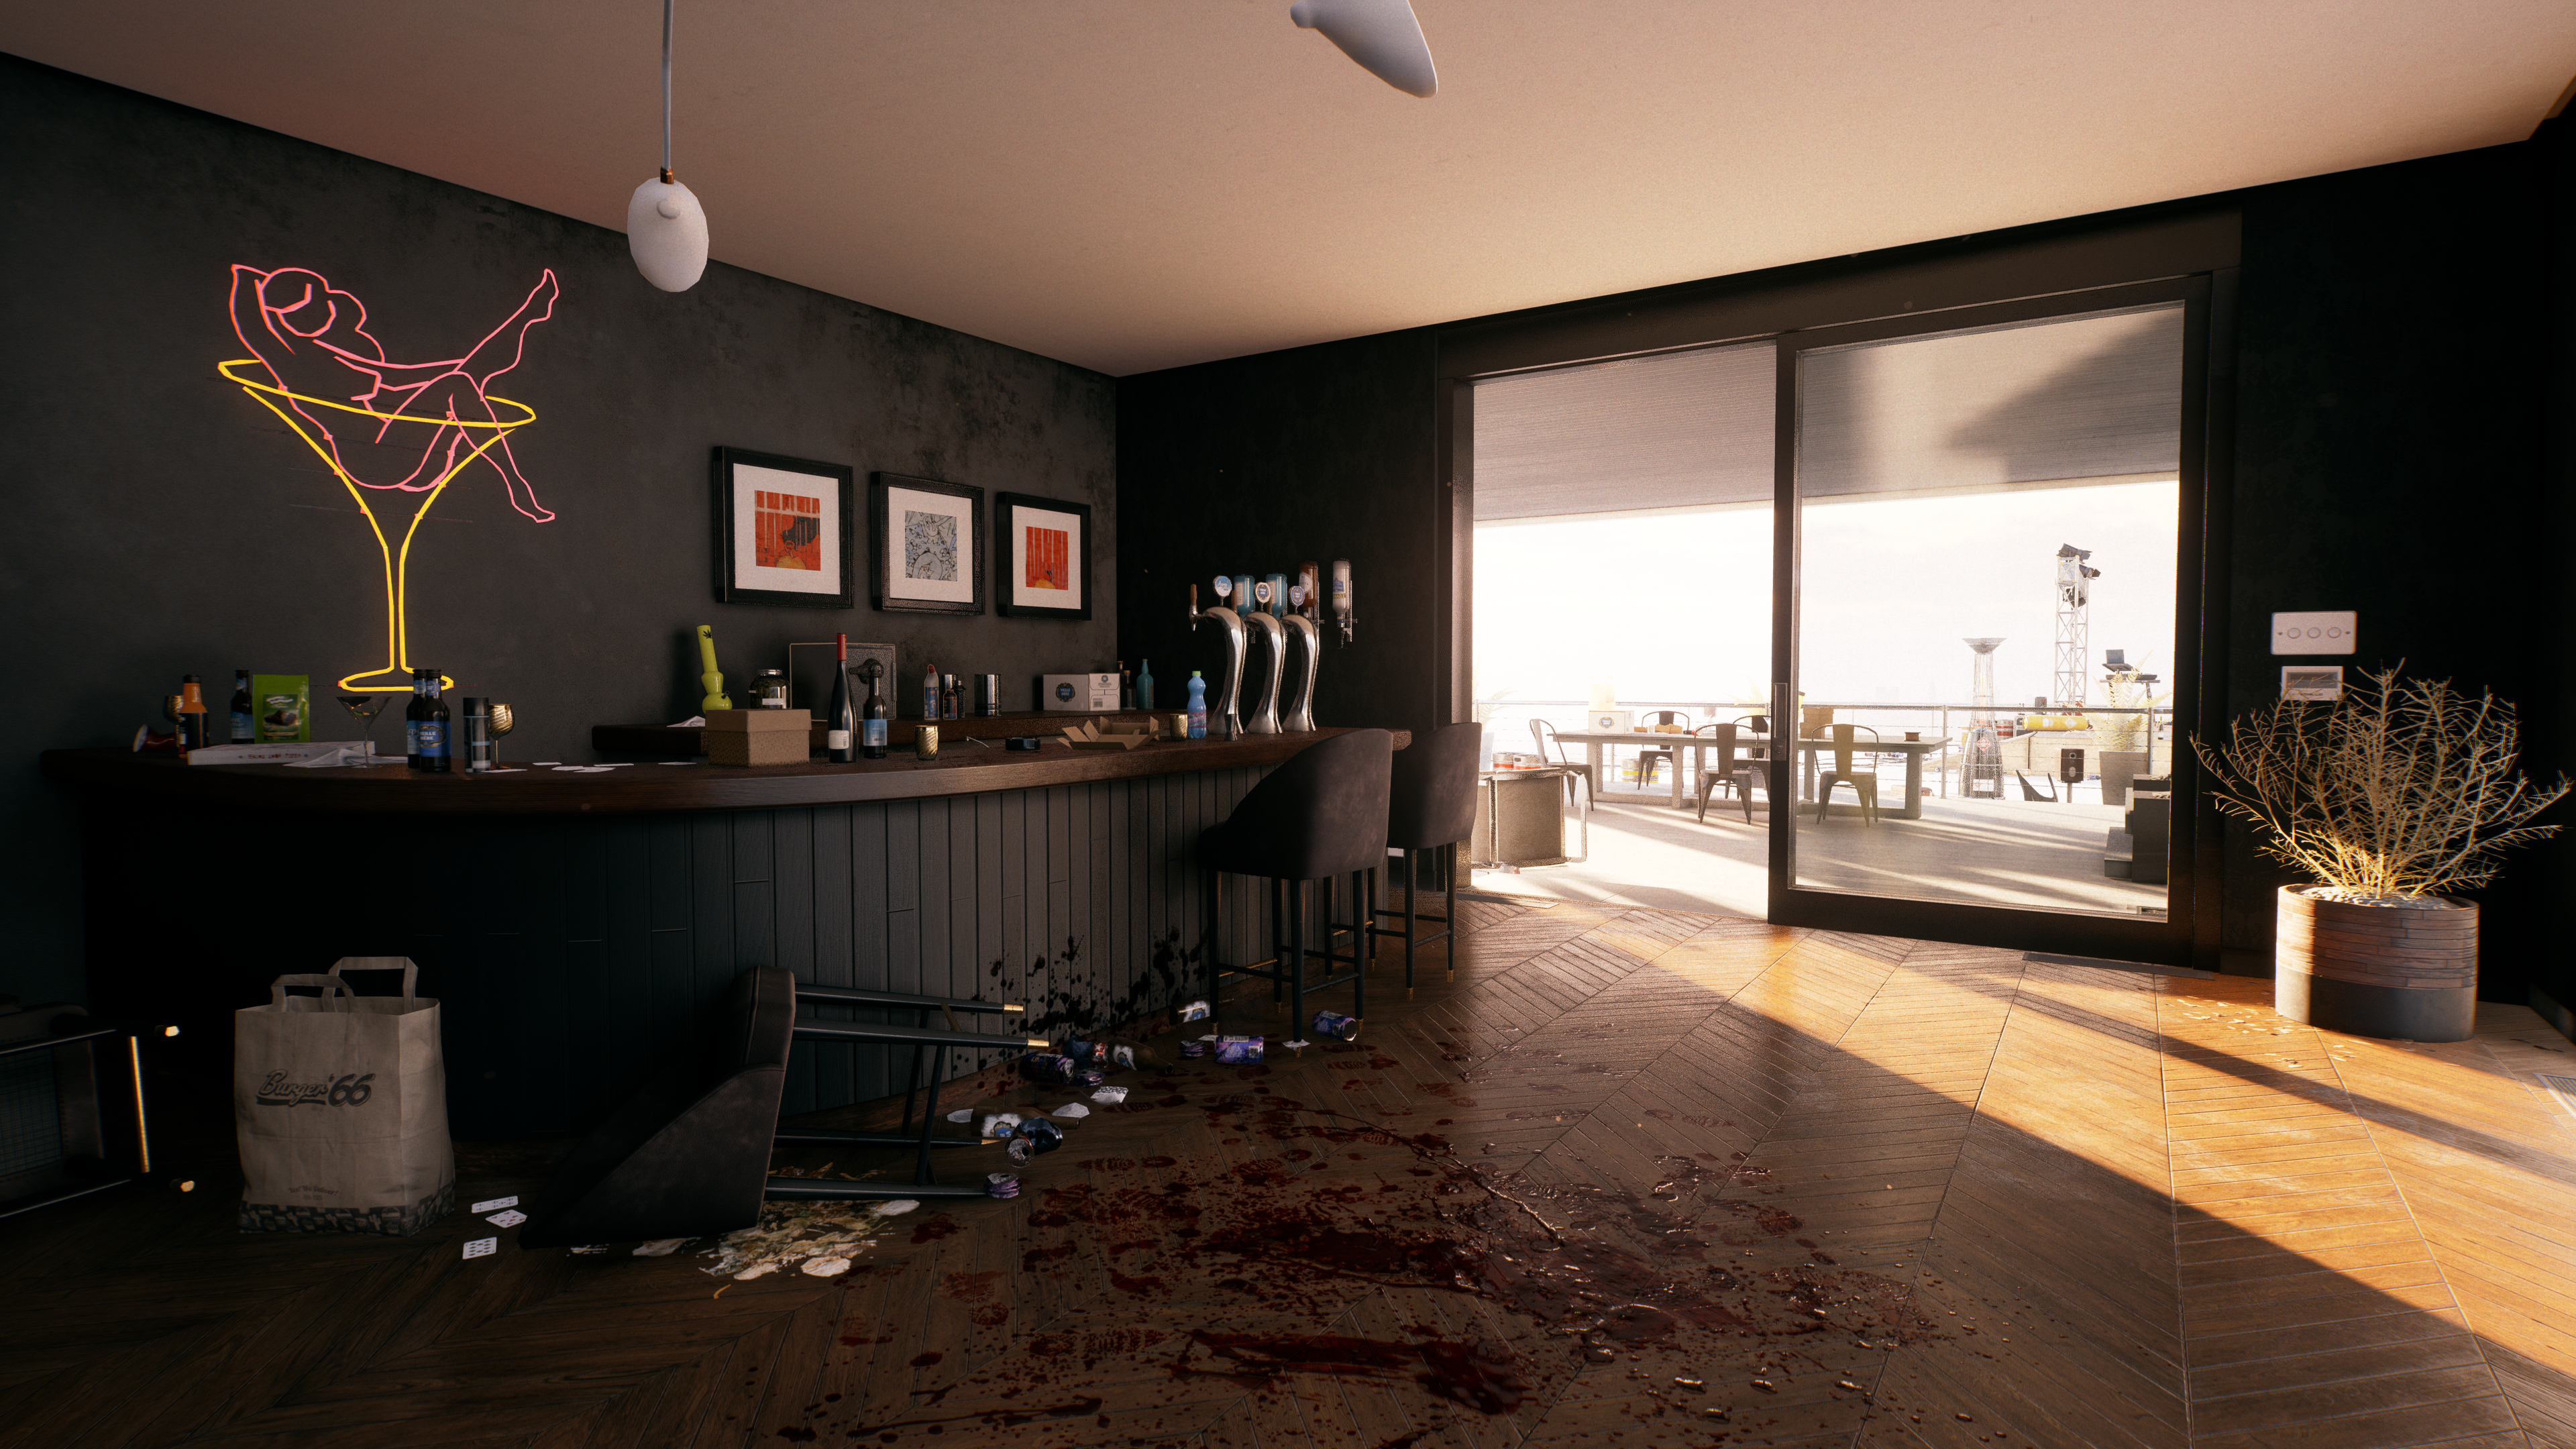 General 3840x2160 Dead Island 2 Nvidia RTX video games CGI interior blood sunlight table chair video game art